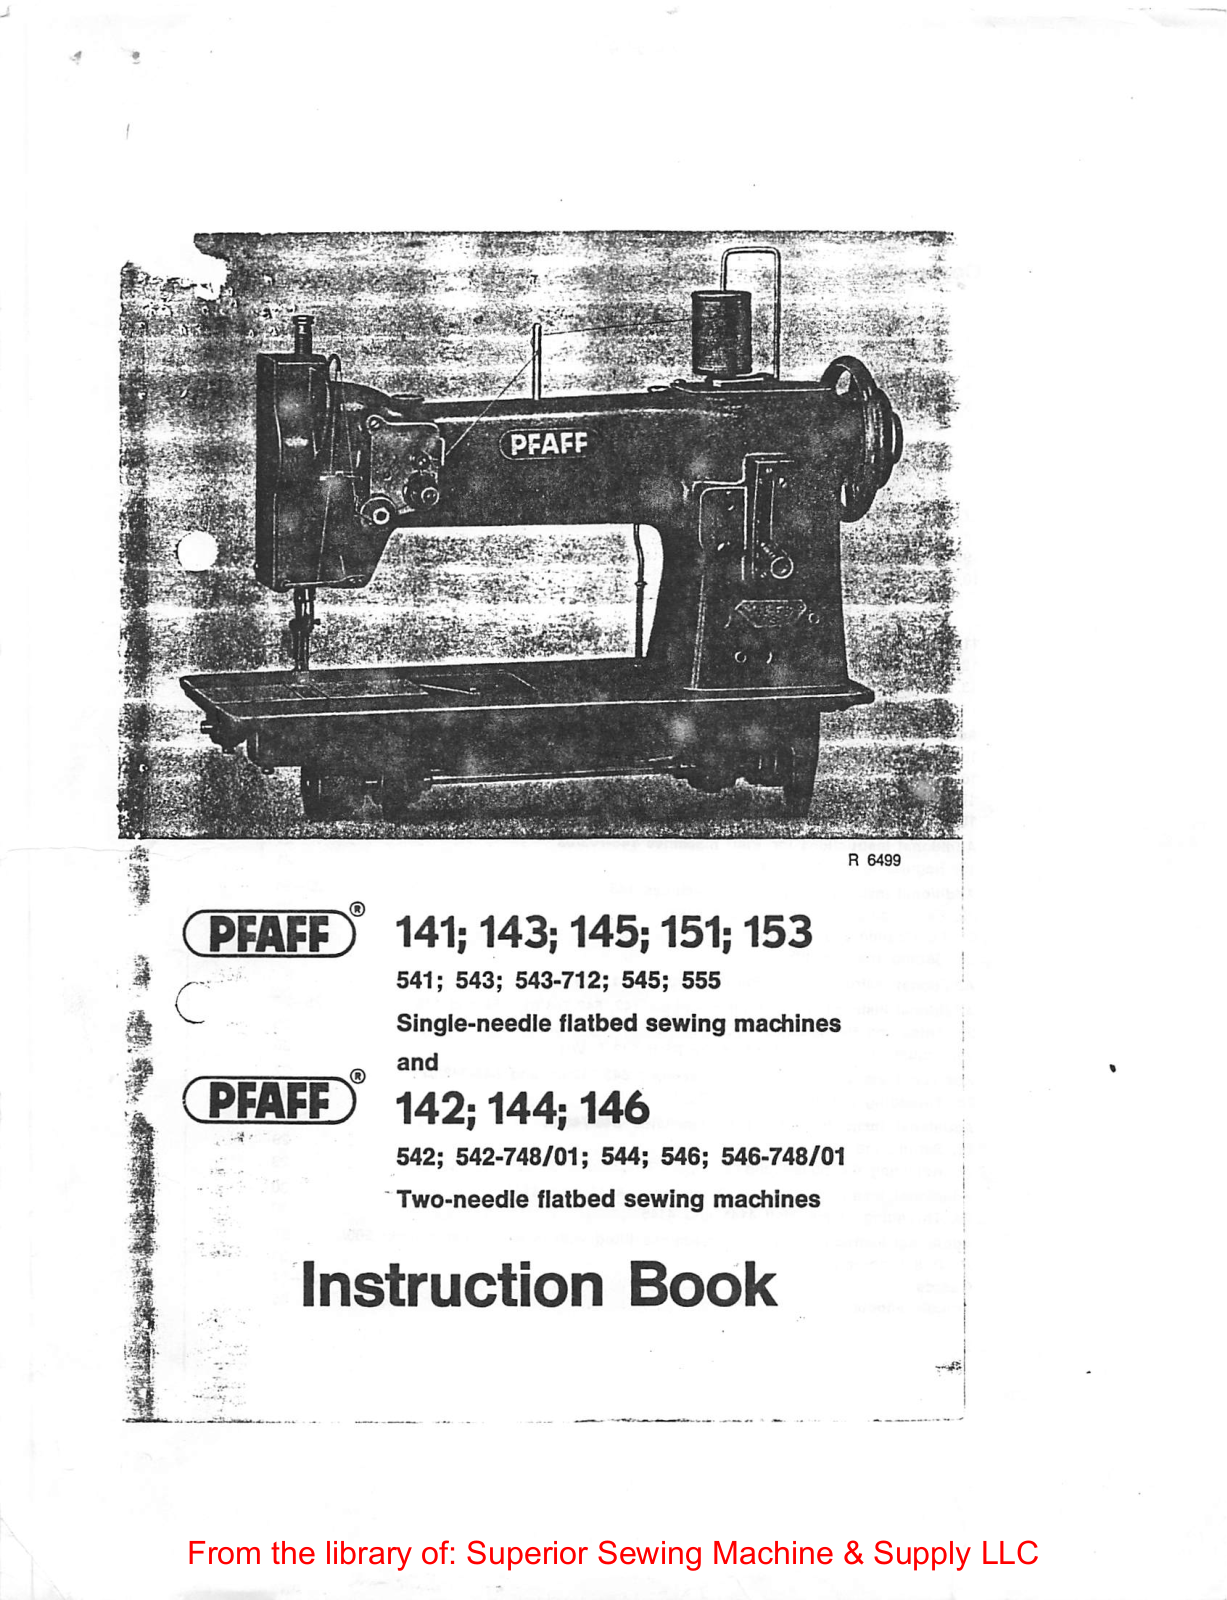 Pfaff 141, 143, 145, 151, 153 Instruction Manual